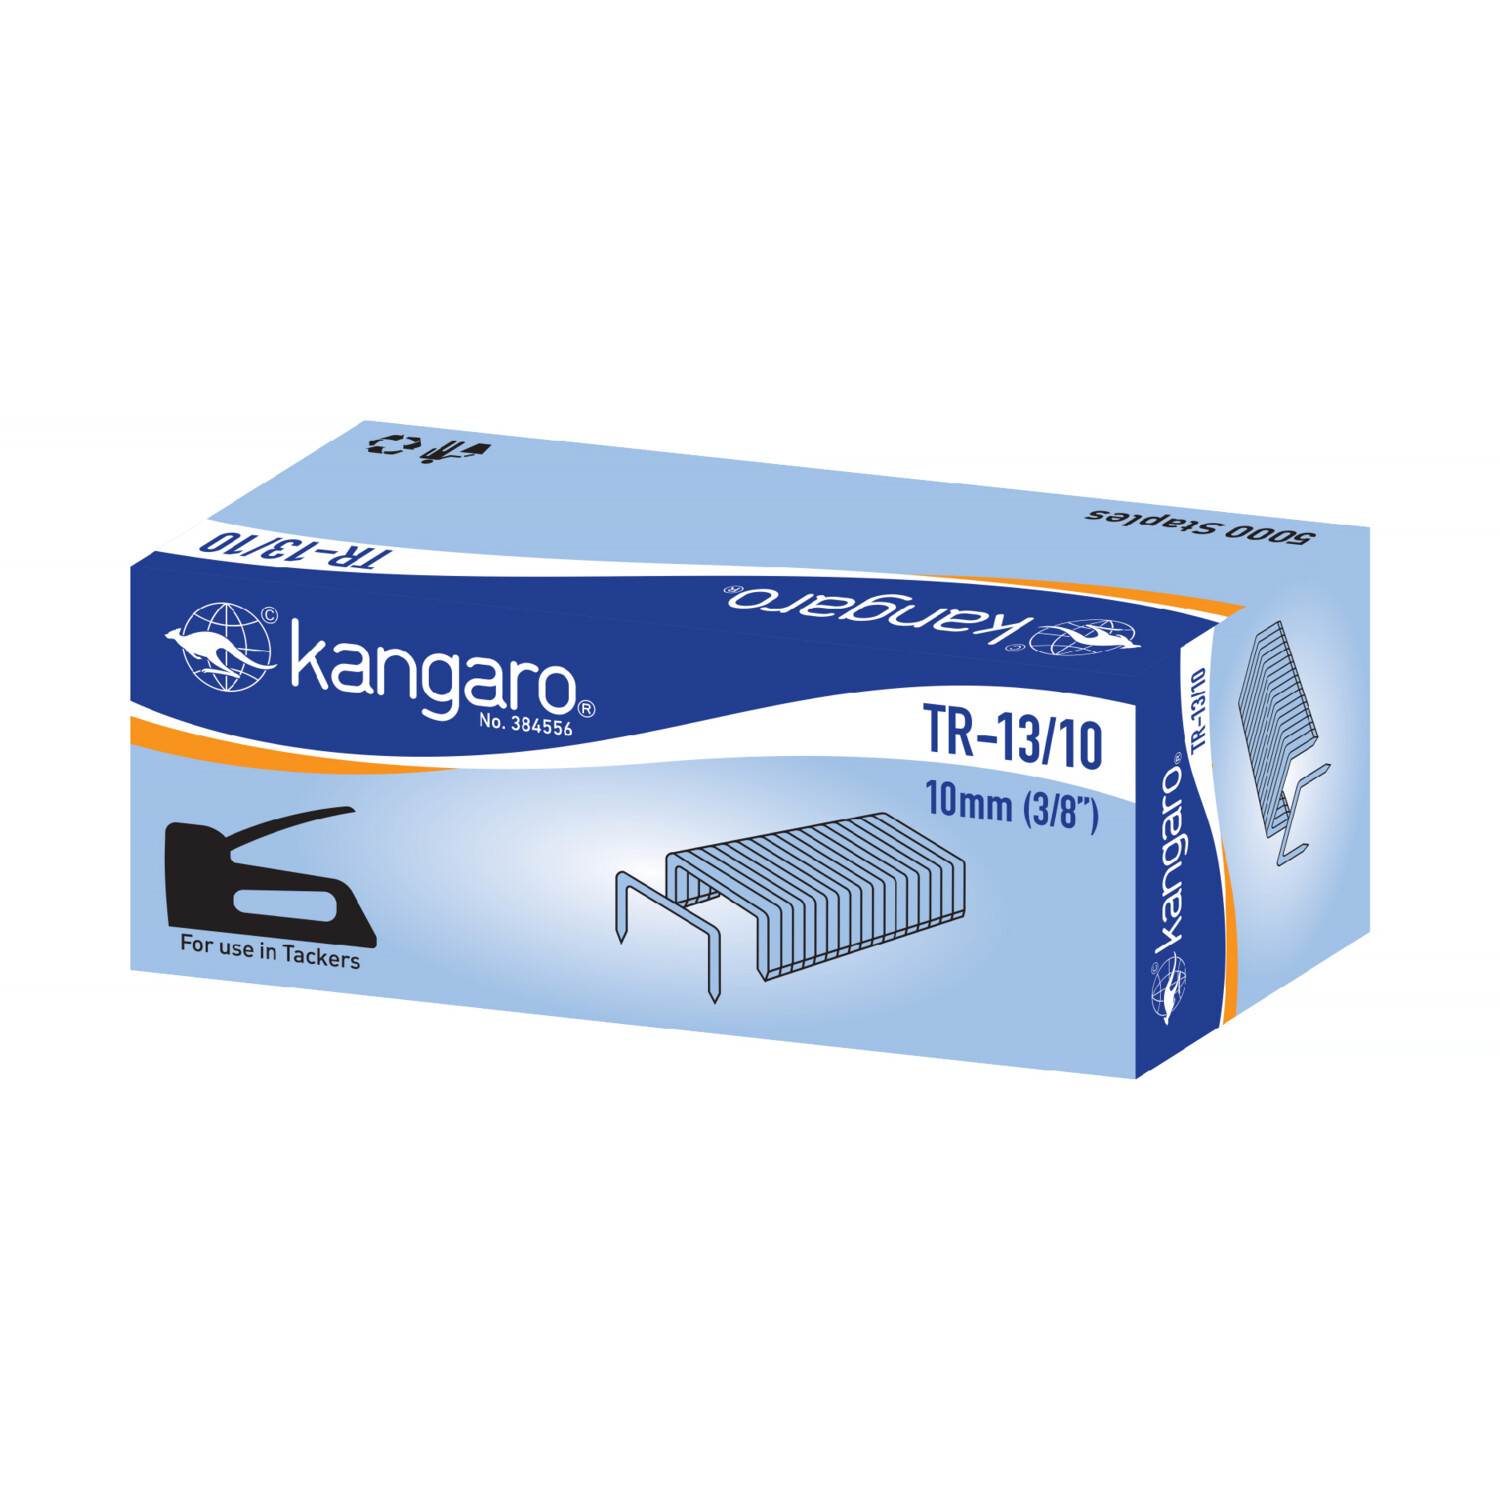 KANGARO 5000 STAPLES
TR-13/10